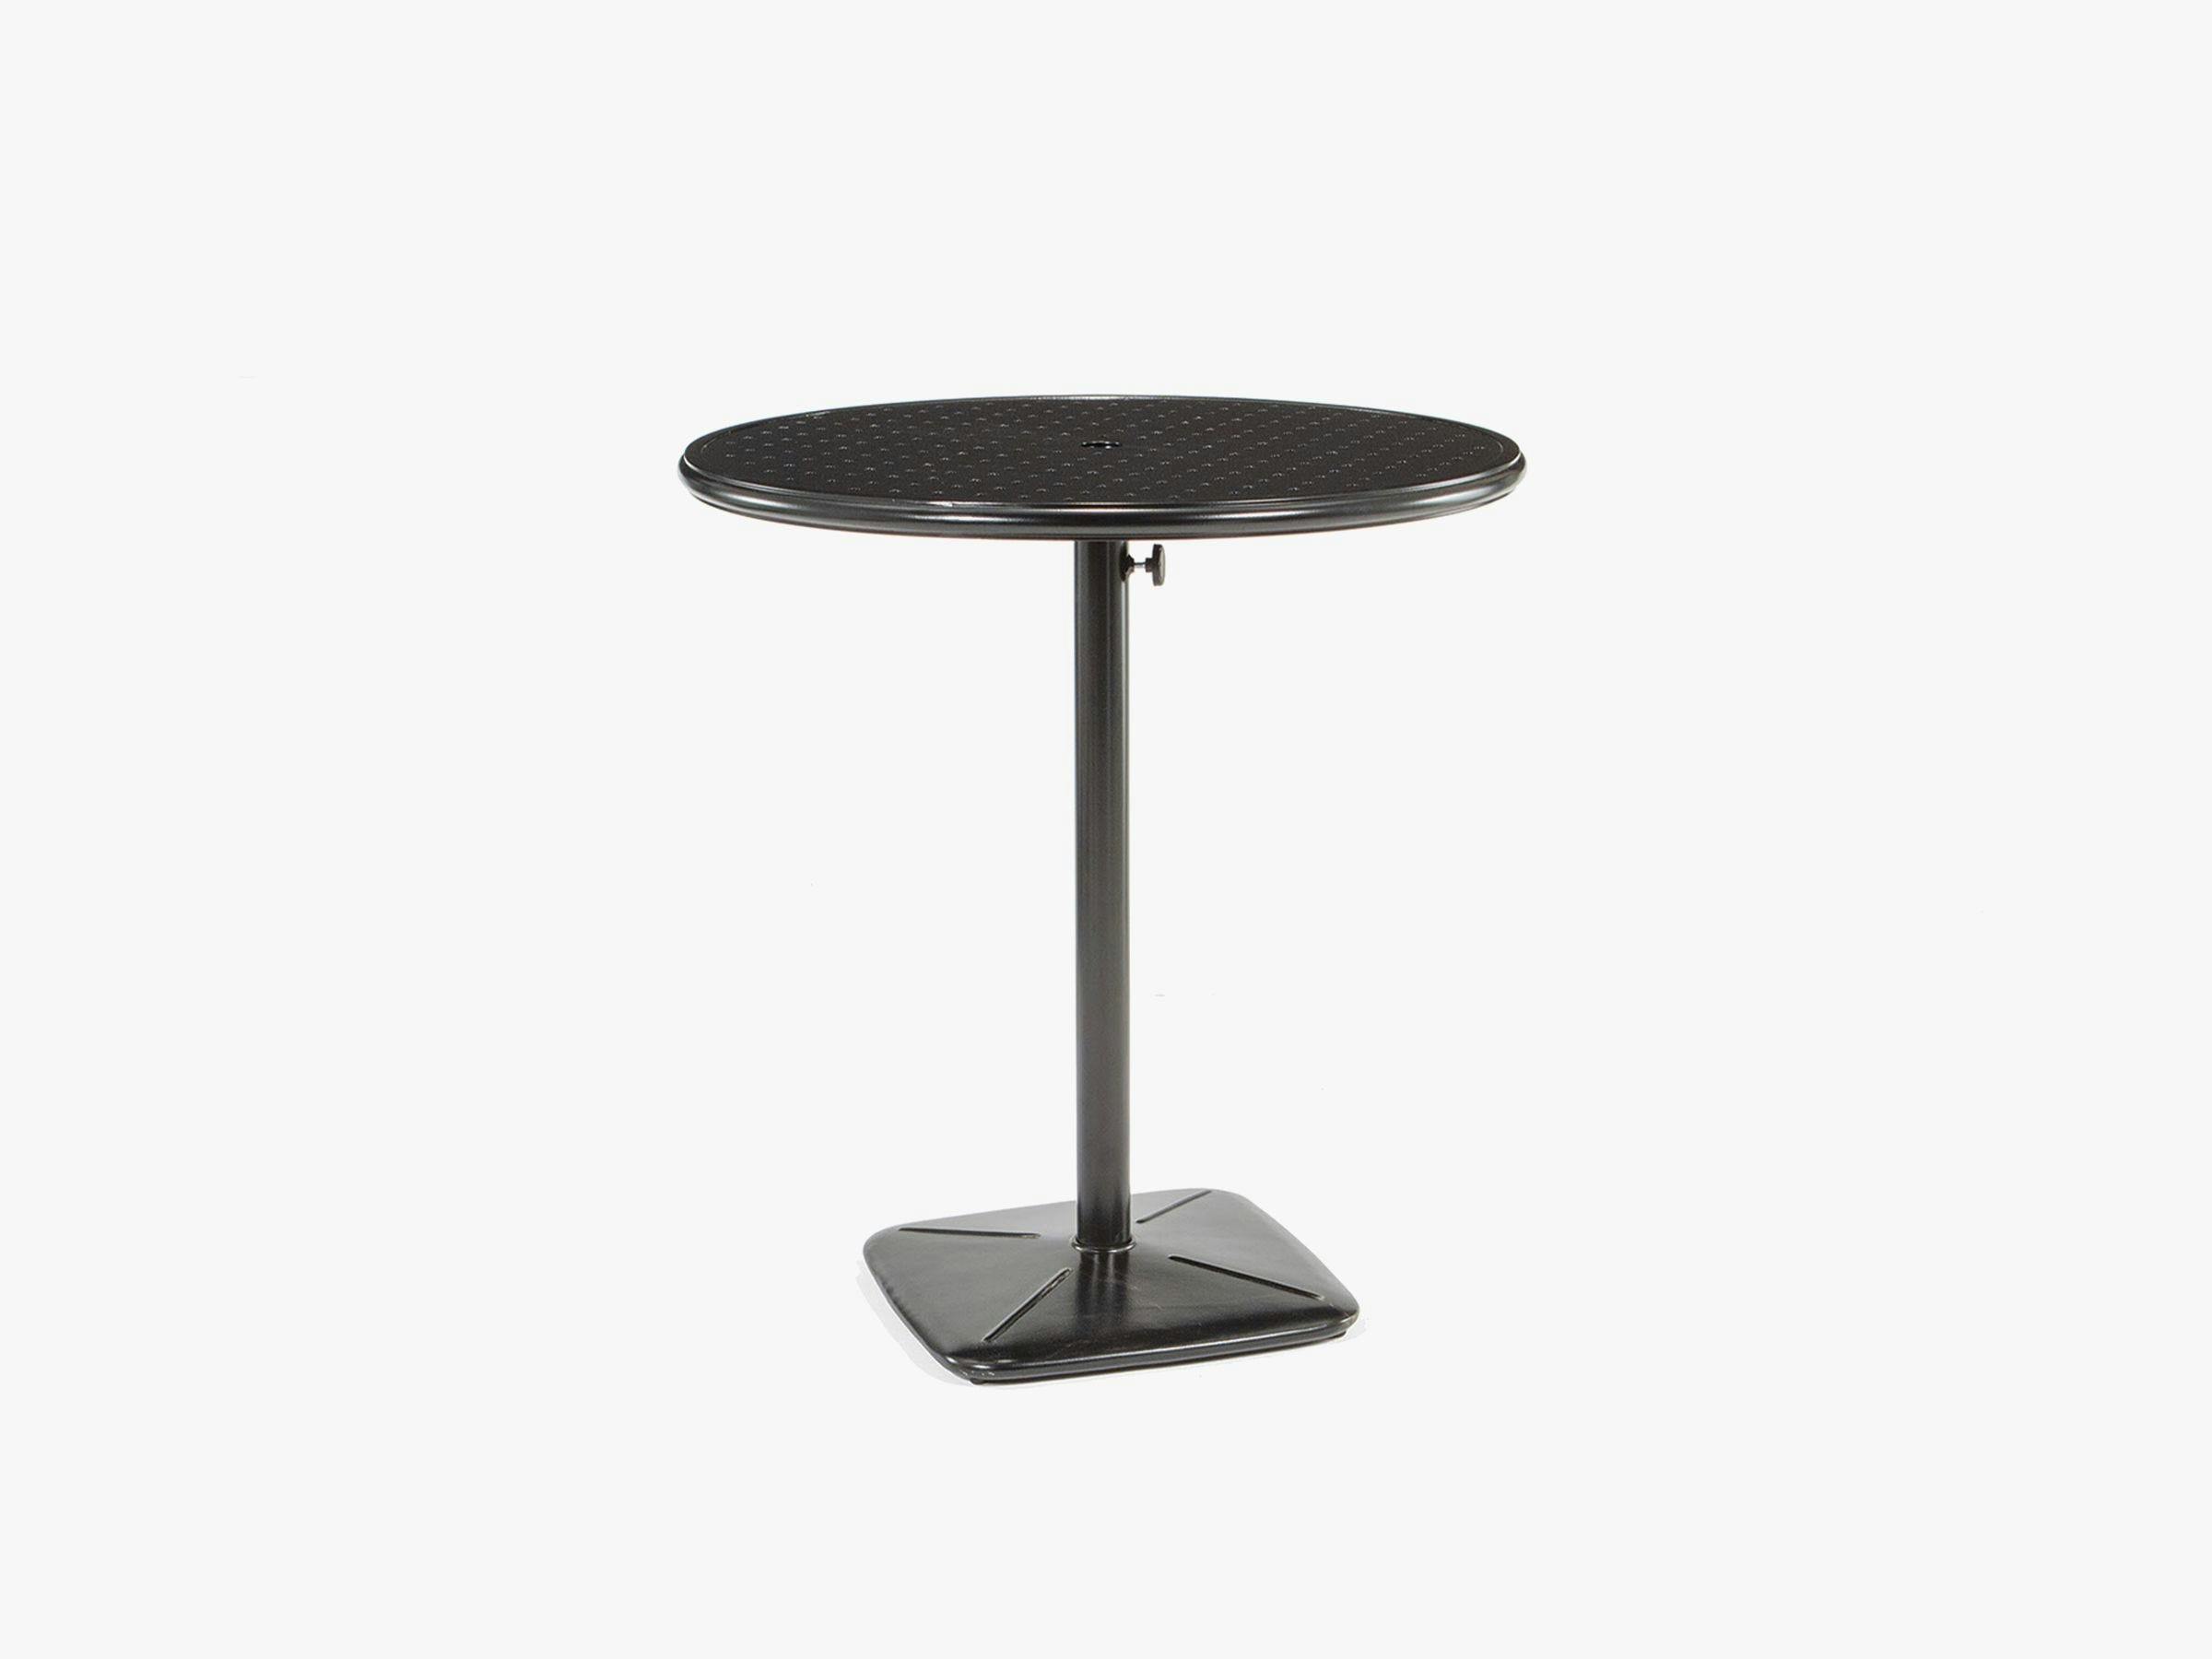 36" Round Bar Cafe Table with Umbrella Hole and Cast Plug